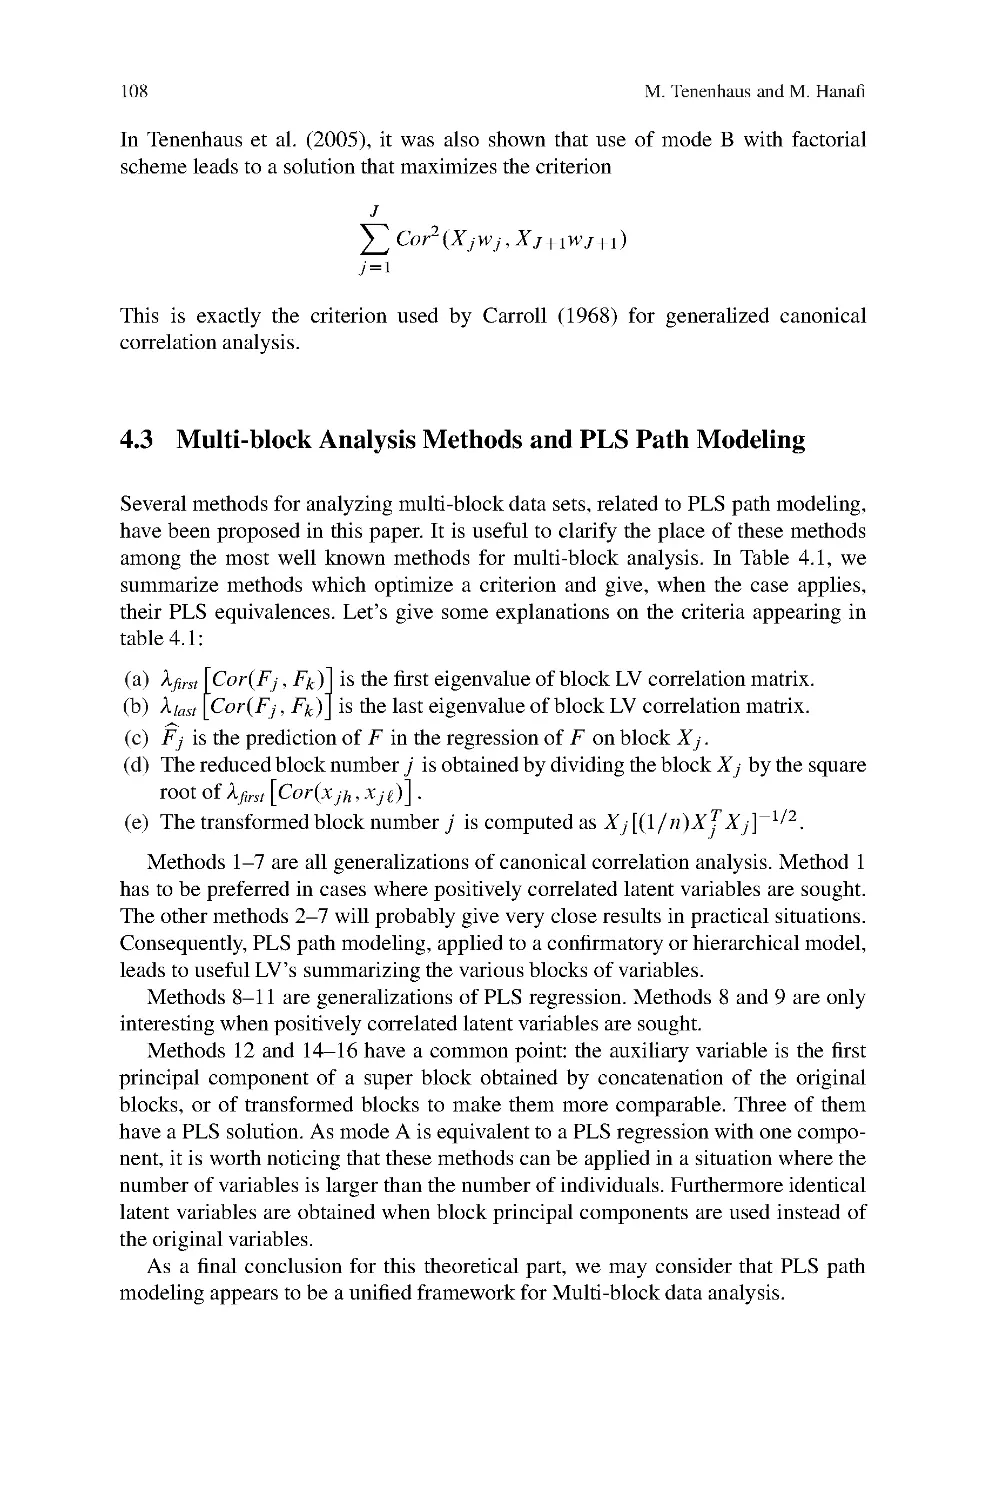 4.3 Multi-block Analysis Methods and PLS Path Modeling